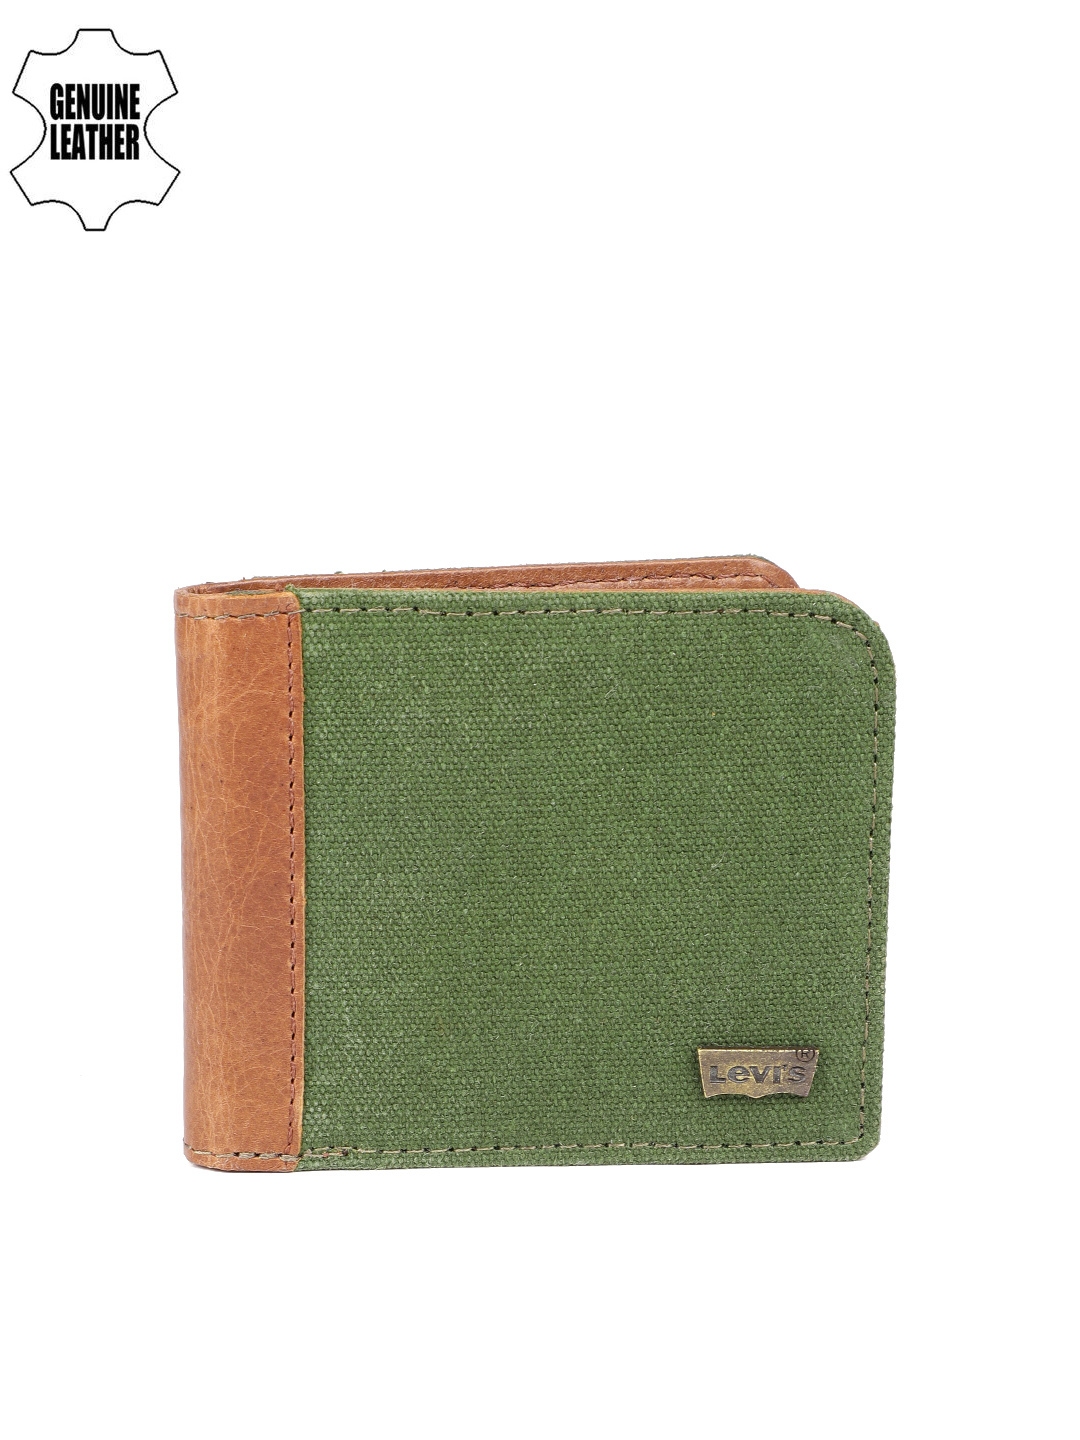 levi's green wallet